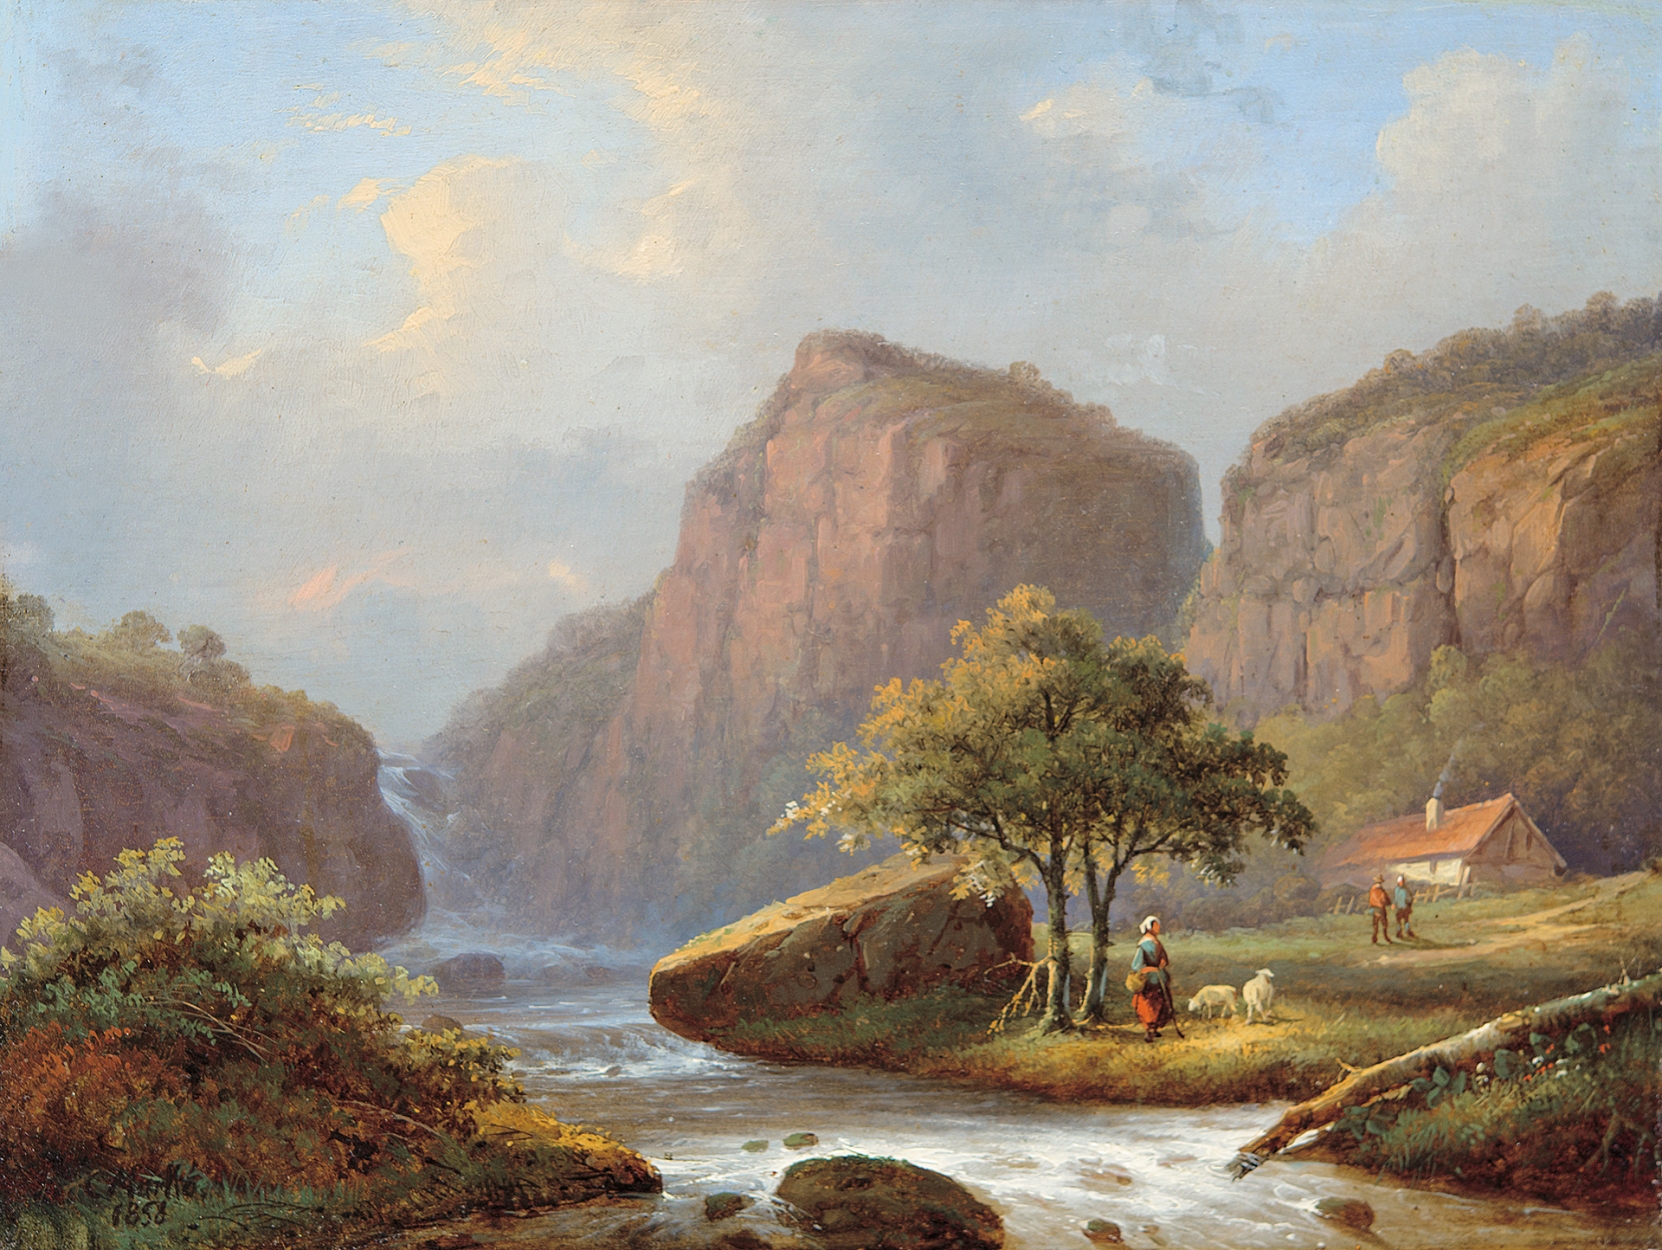 Markó Károly, Ifj. (1822 - 1891) Waterfall in the Mountains, 1858